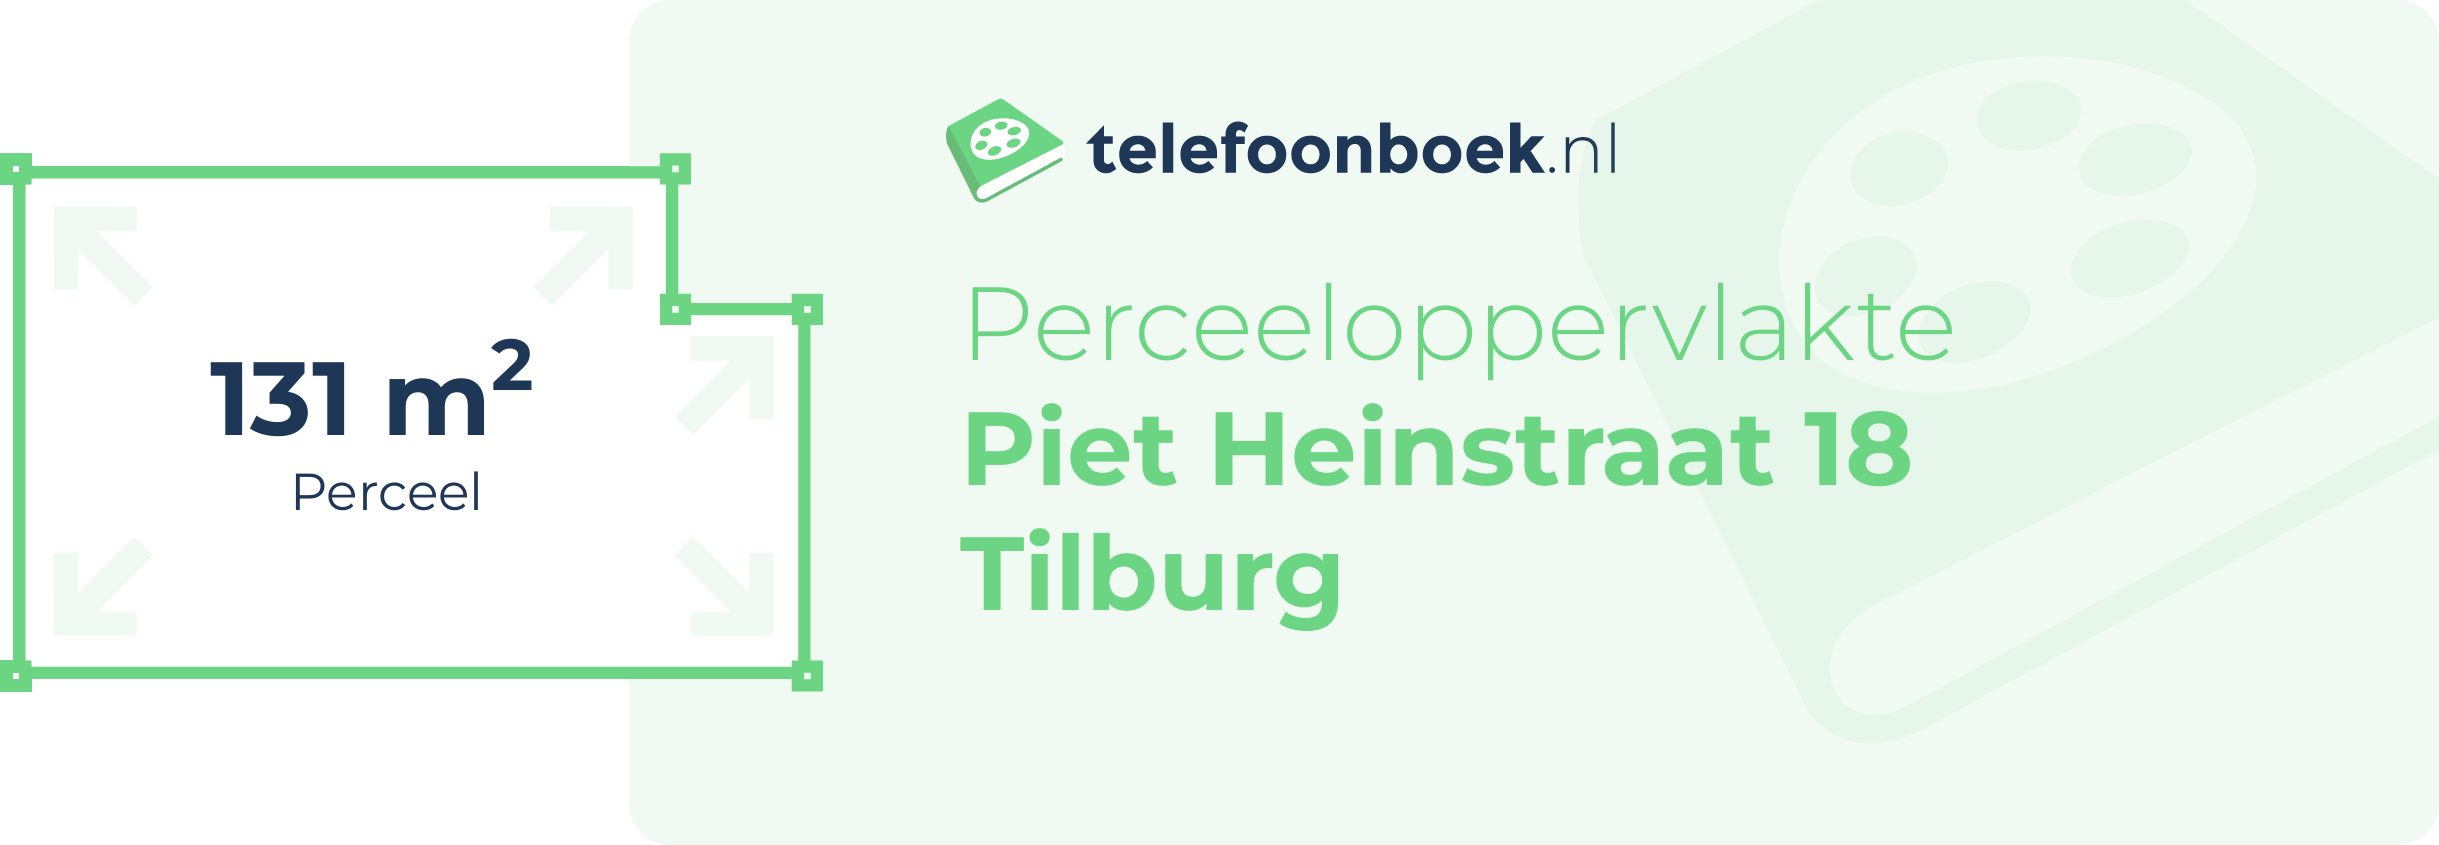 Perceeloppervlakte Piet Heinstraat 18 Tilburg